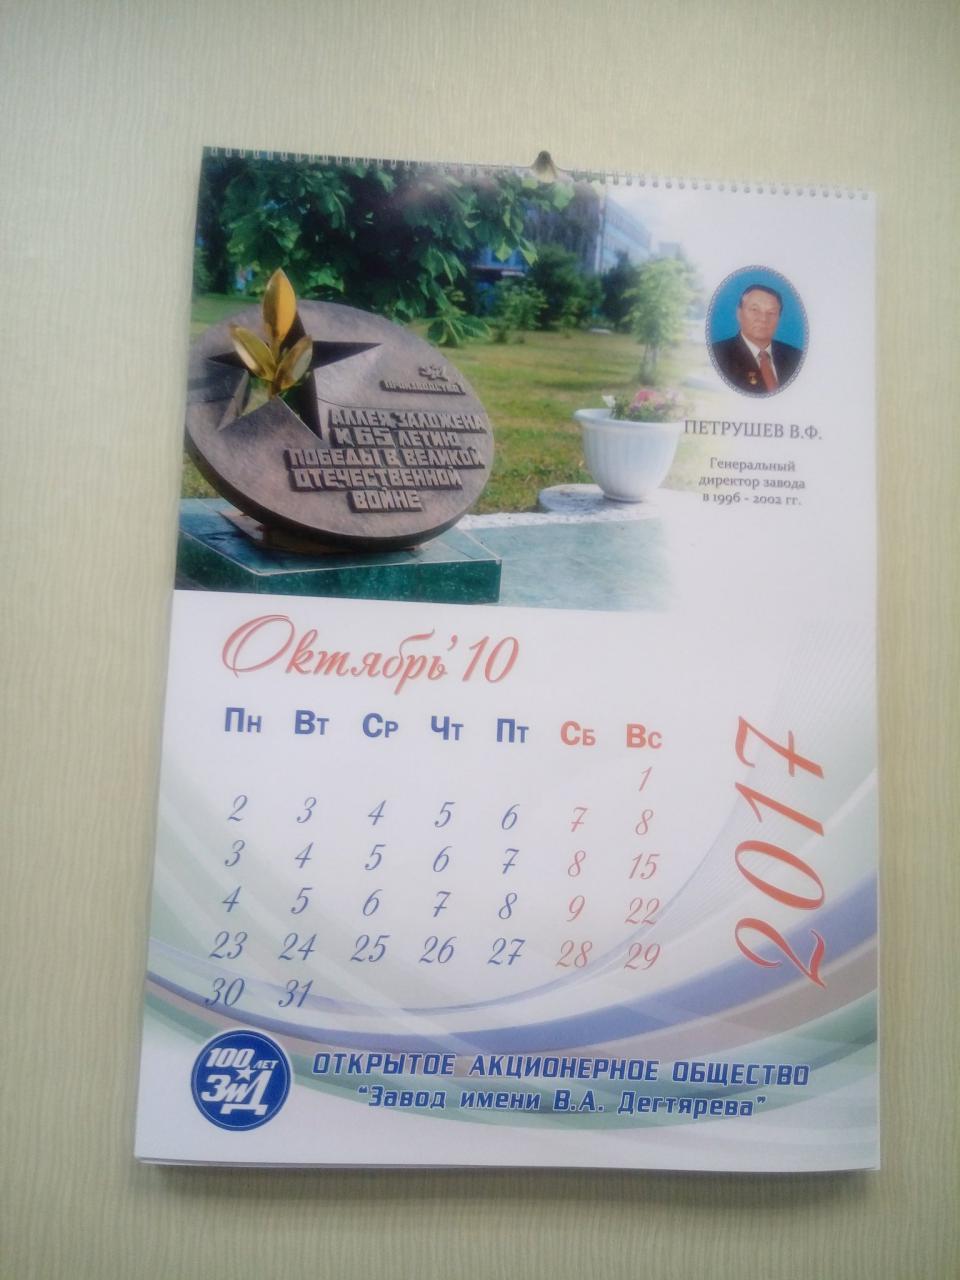 I will turn the calendar, and again on October 3 - The calendar, Fail, Plant named after Degtyarev